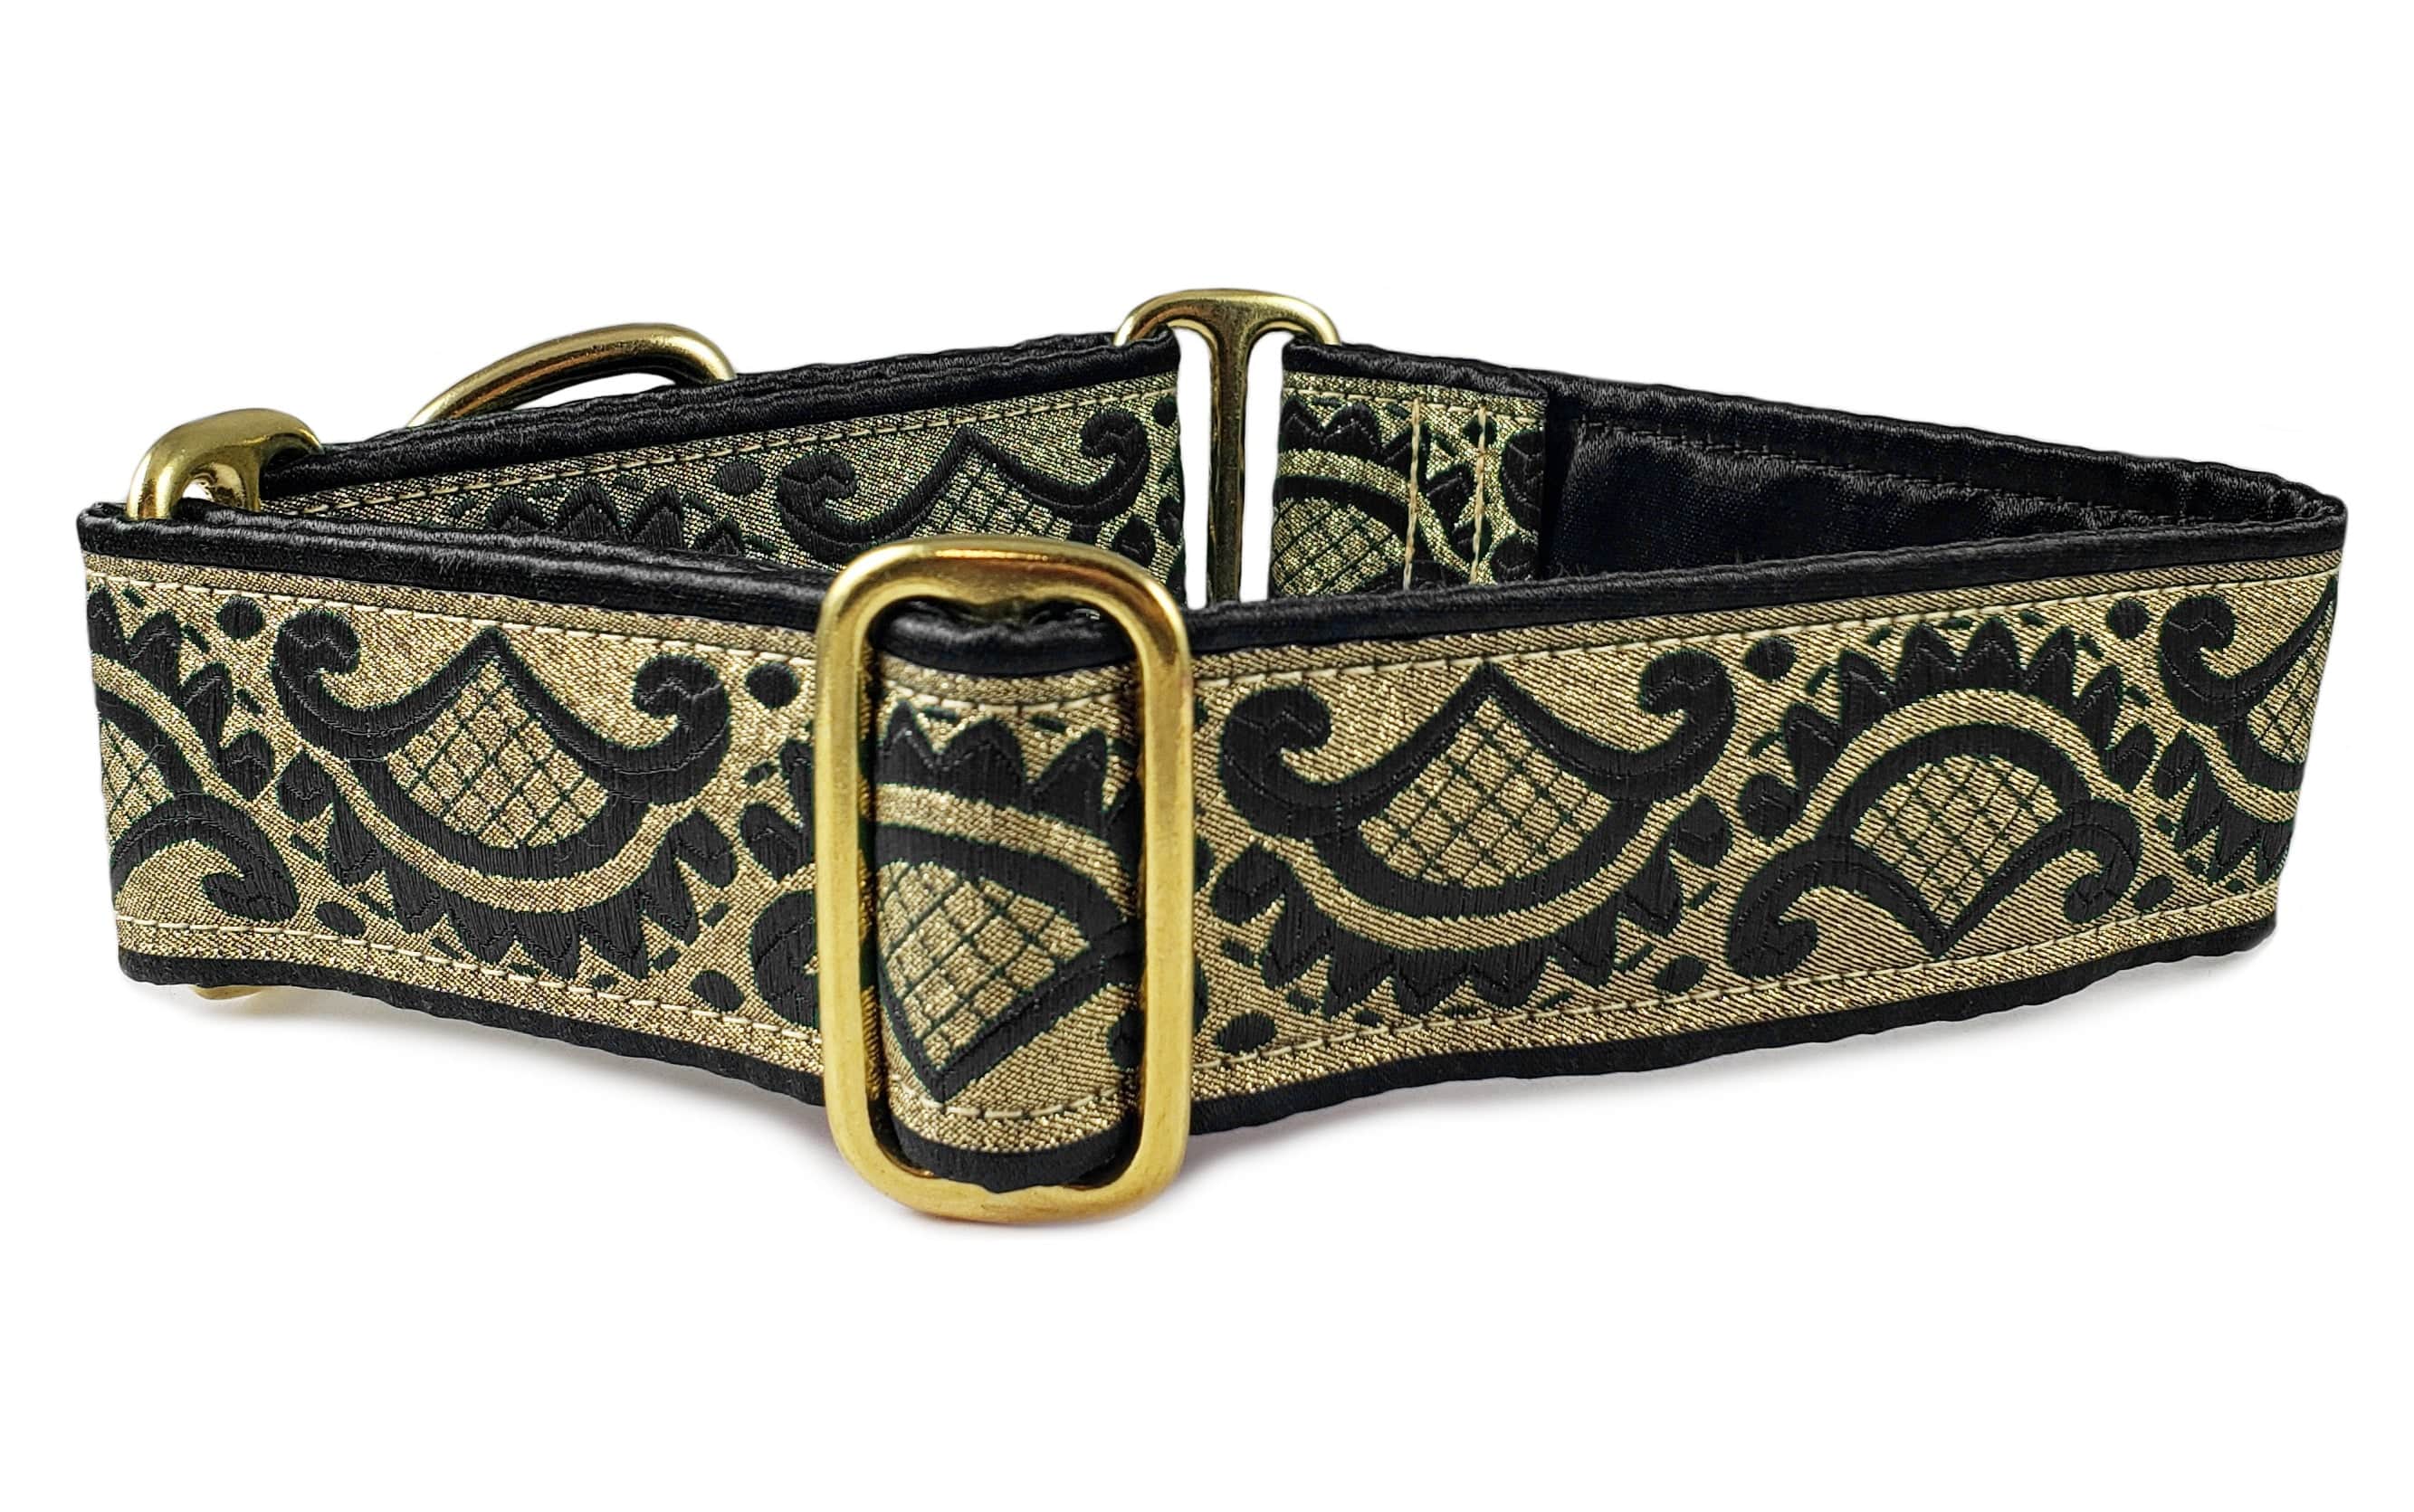 The Hound Haberdashery Collar Tivoli Jacquard in Black & Gold - Martingale Dog Collar or Buckle Dog Collar - 1.5" Width